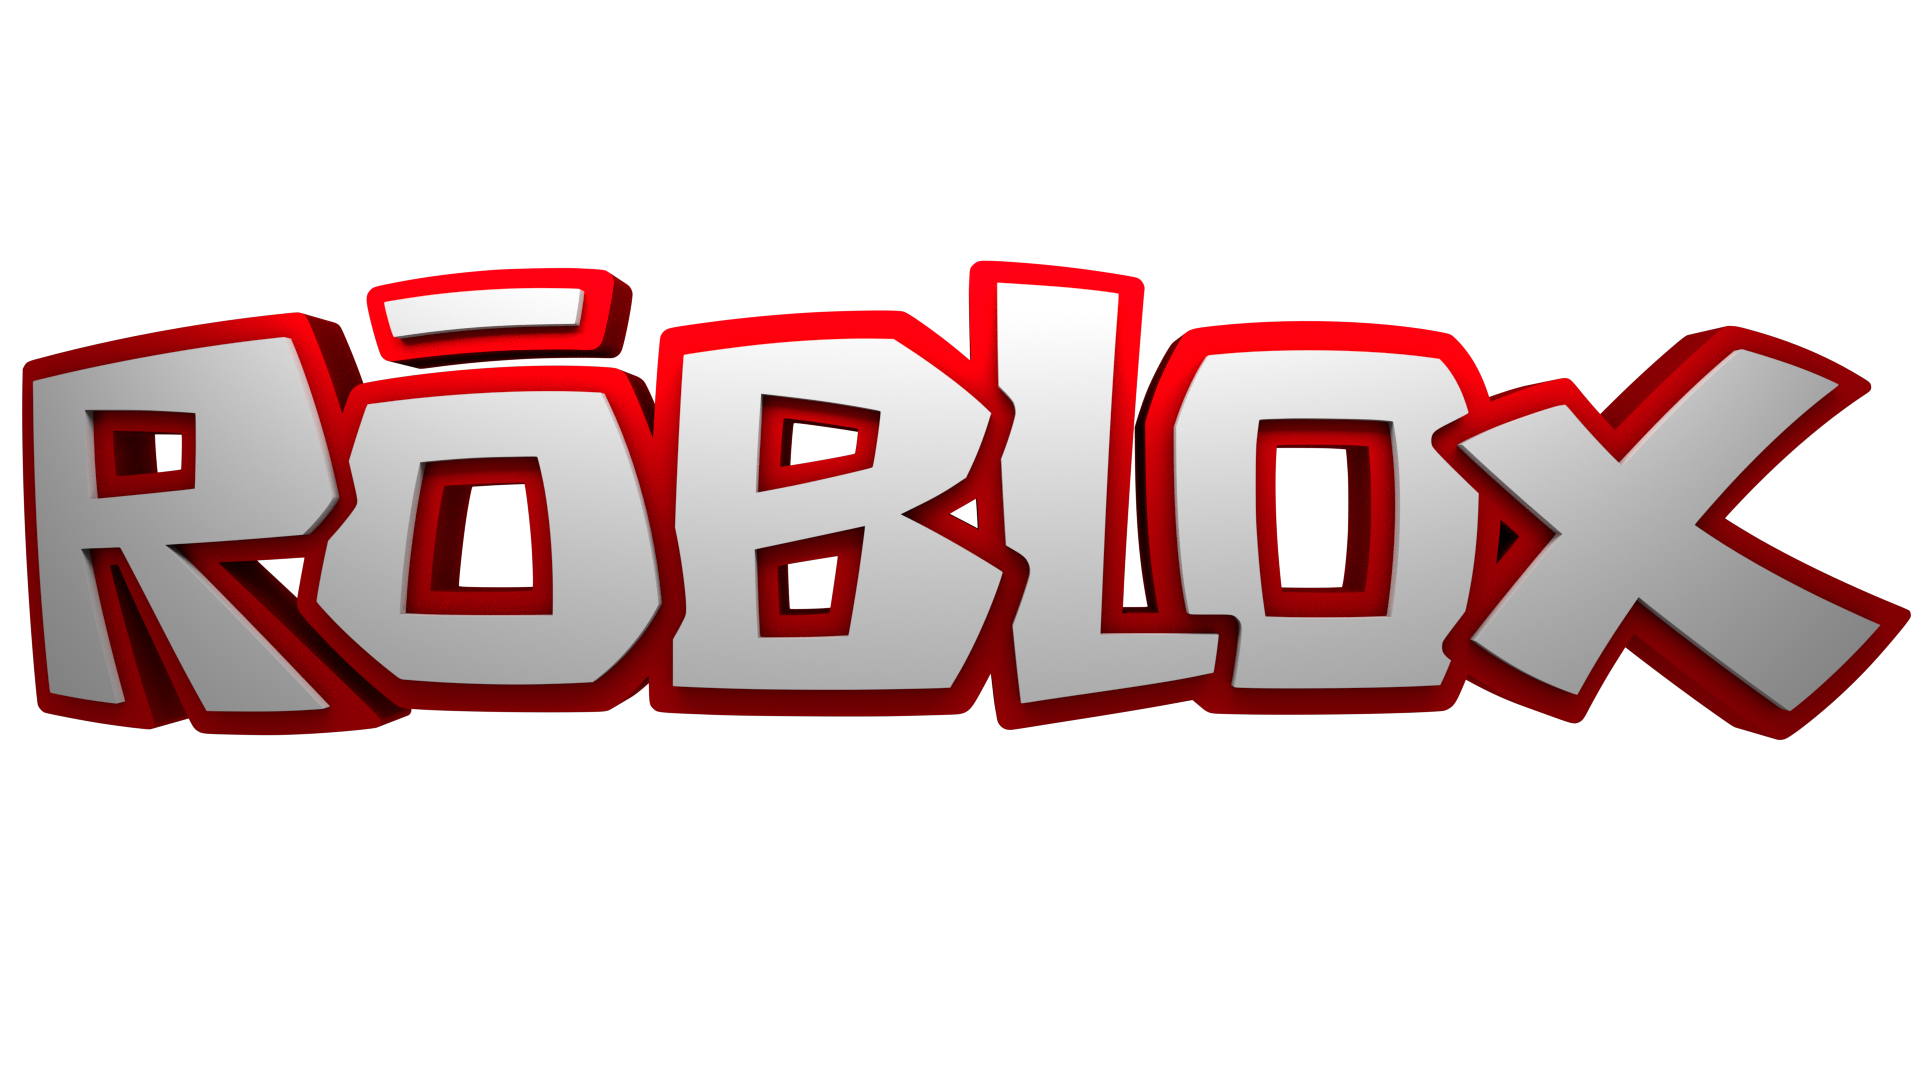 Download Roblox Logo Photos Free Download Image HQ PNG Image